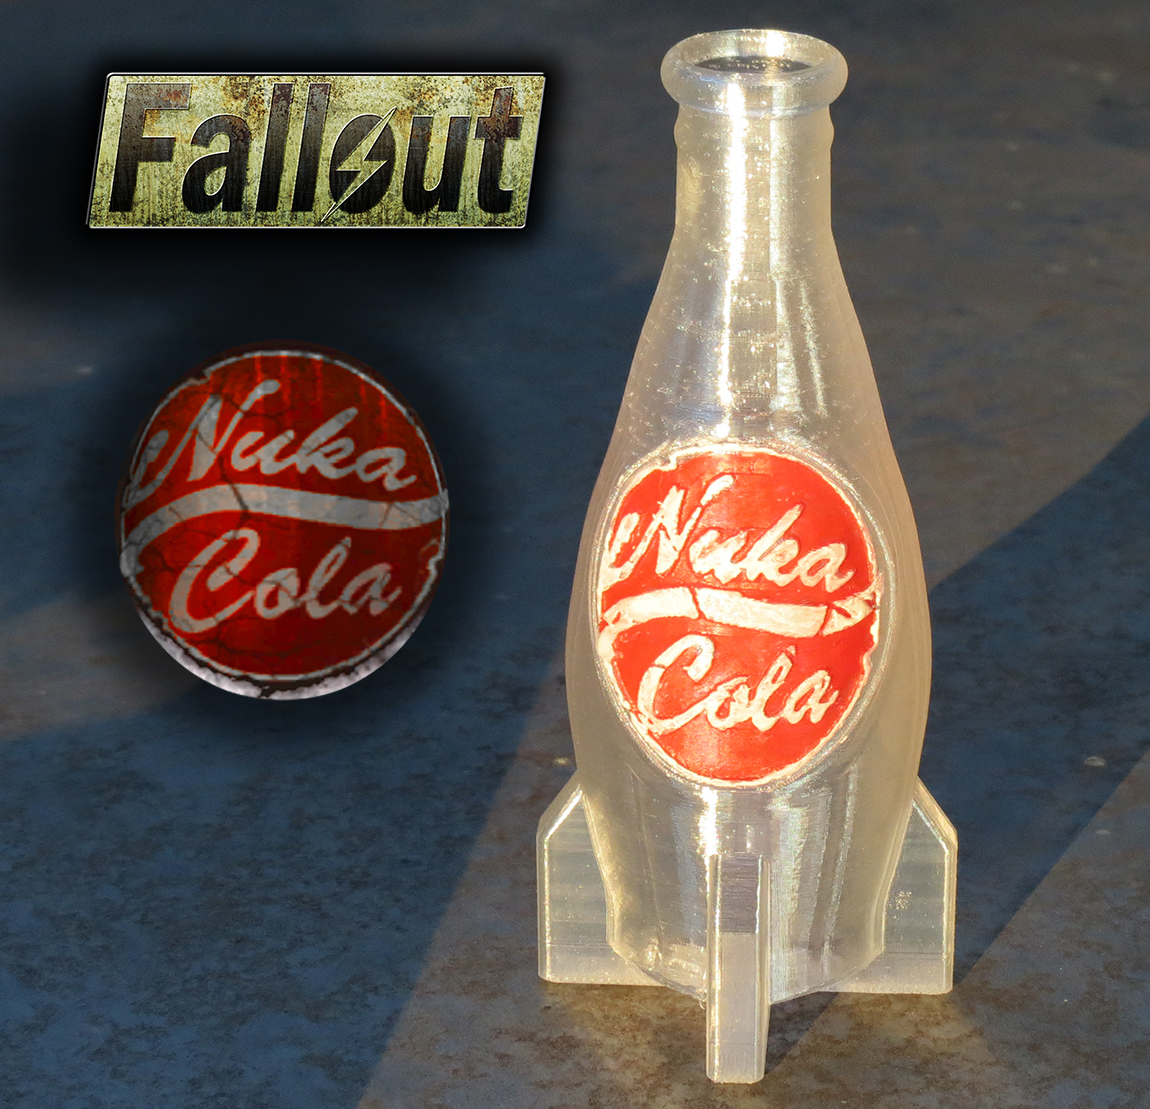 Fallout 4 виды ядер колы фото 110